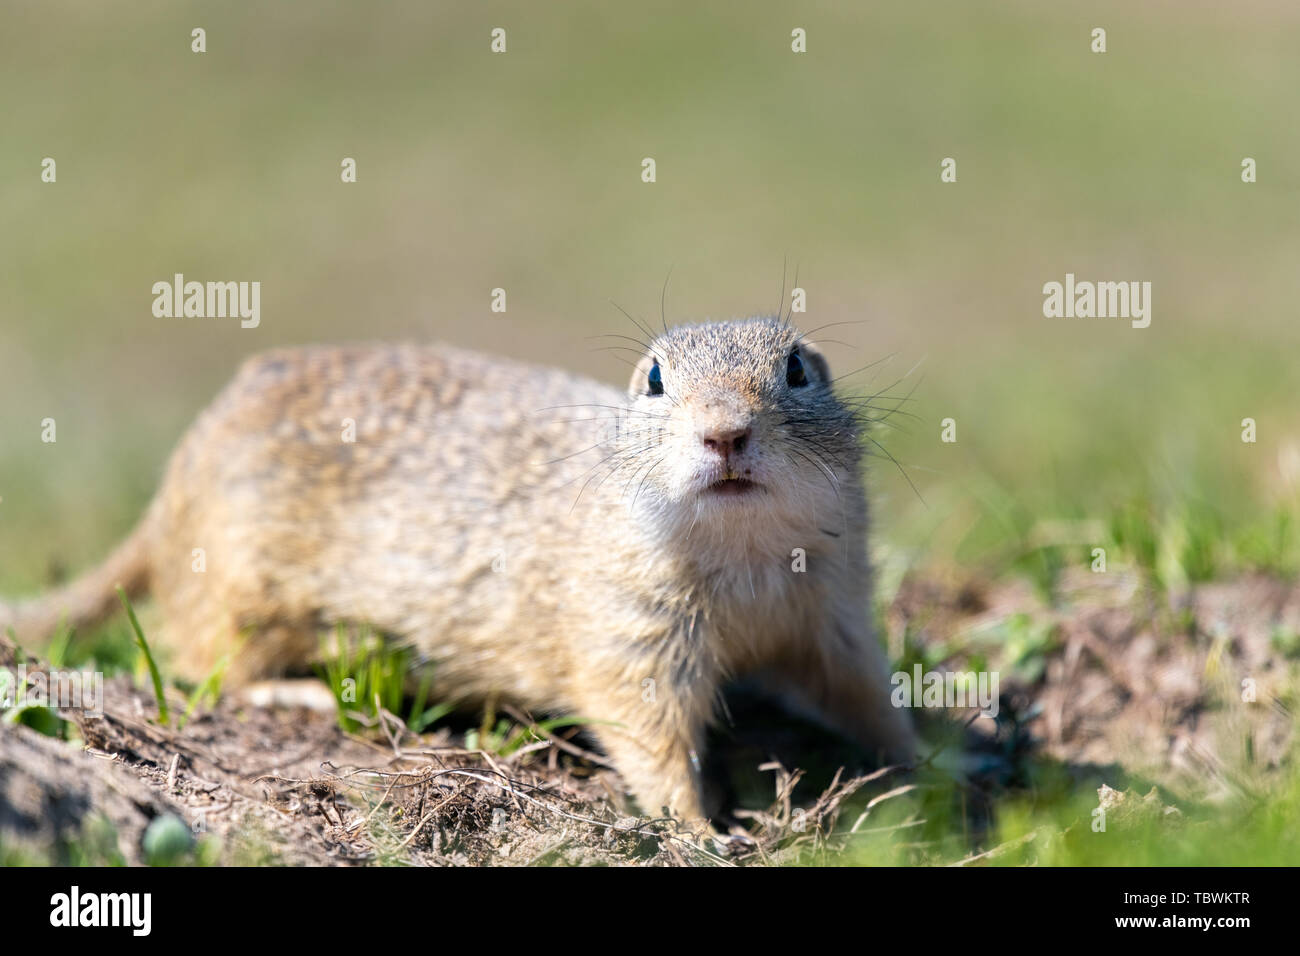 A wild european ground squirrel (Spermophilus citellus), also known as the European souslik in their habitat. Early spring. Stock Photo